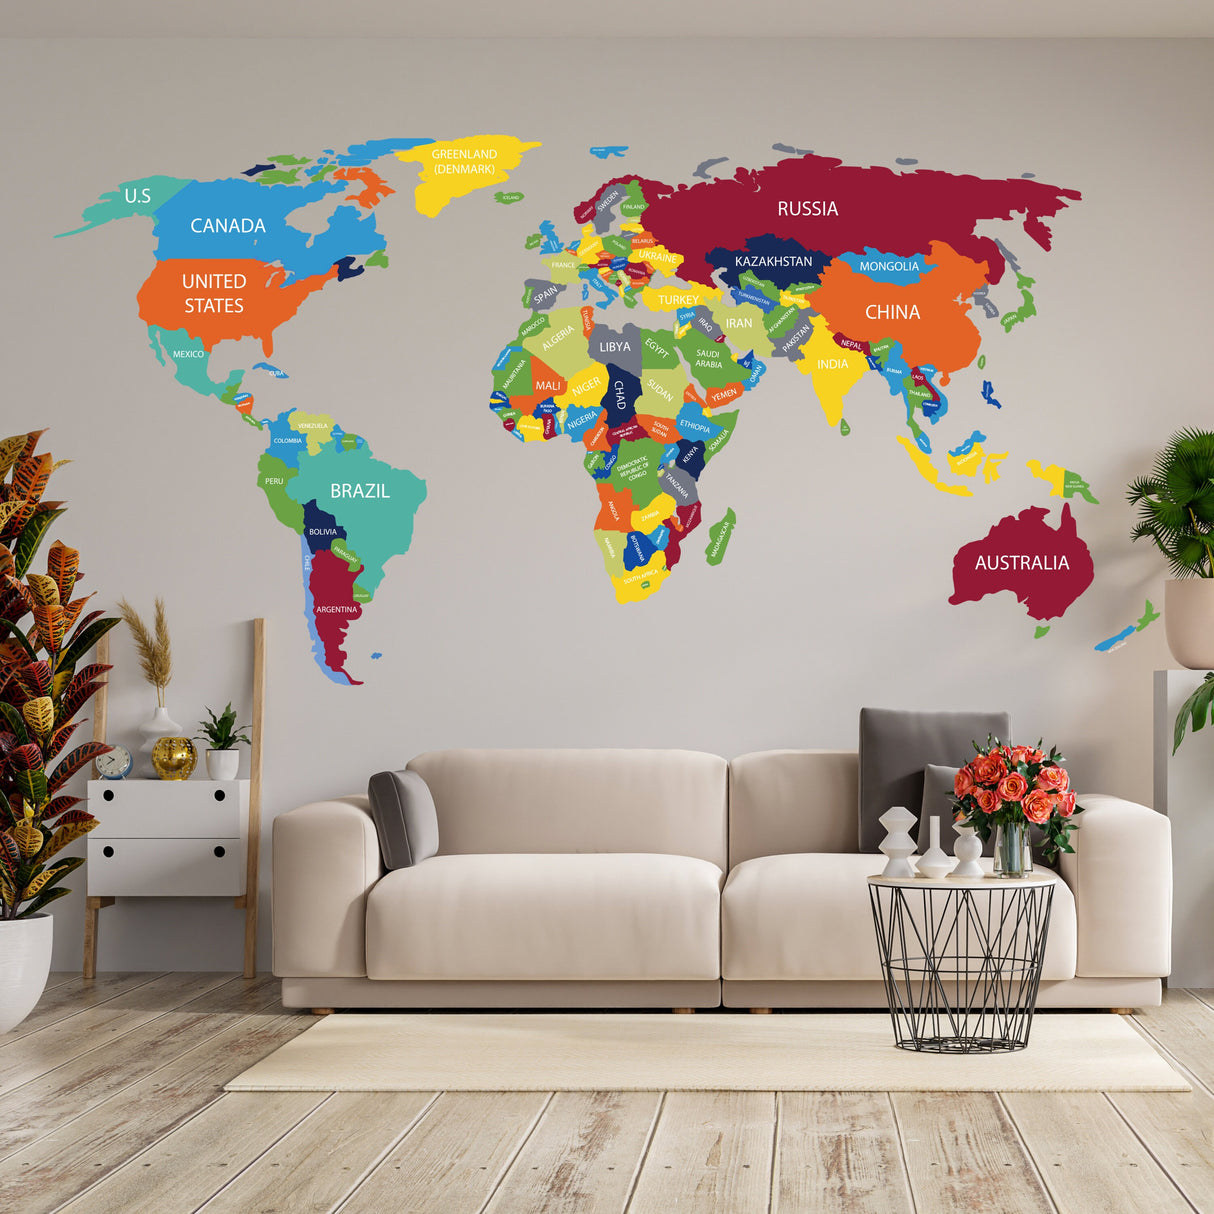 Global Traveler Themed Vinyl Wall Sticker Decal - World Exploration Design